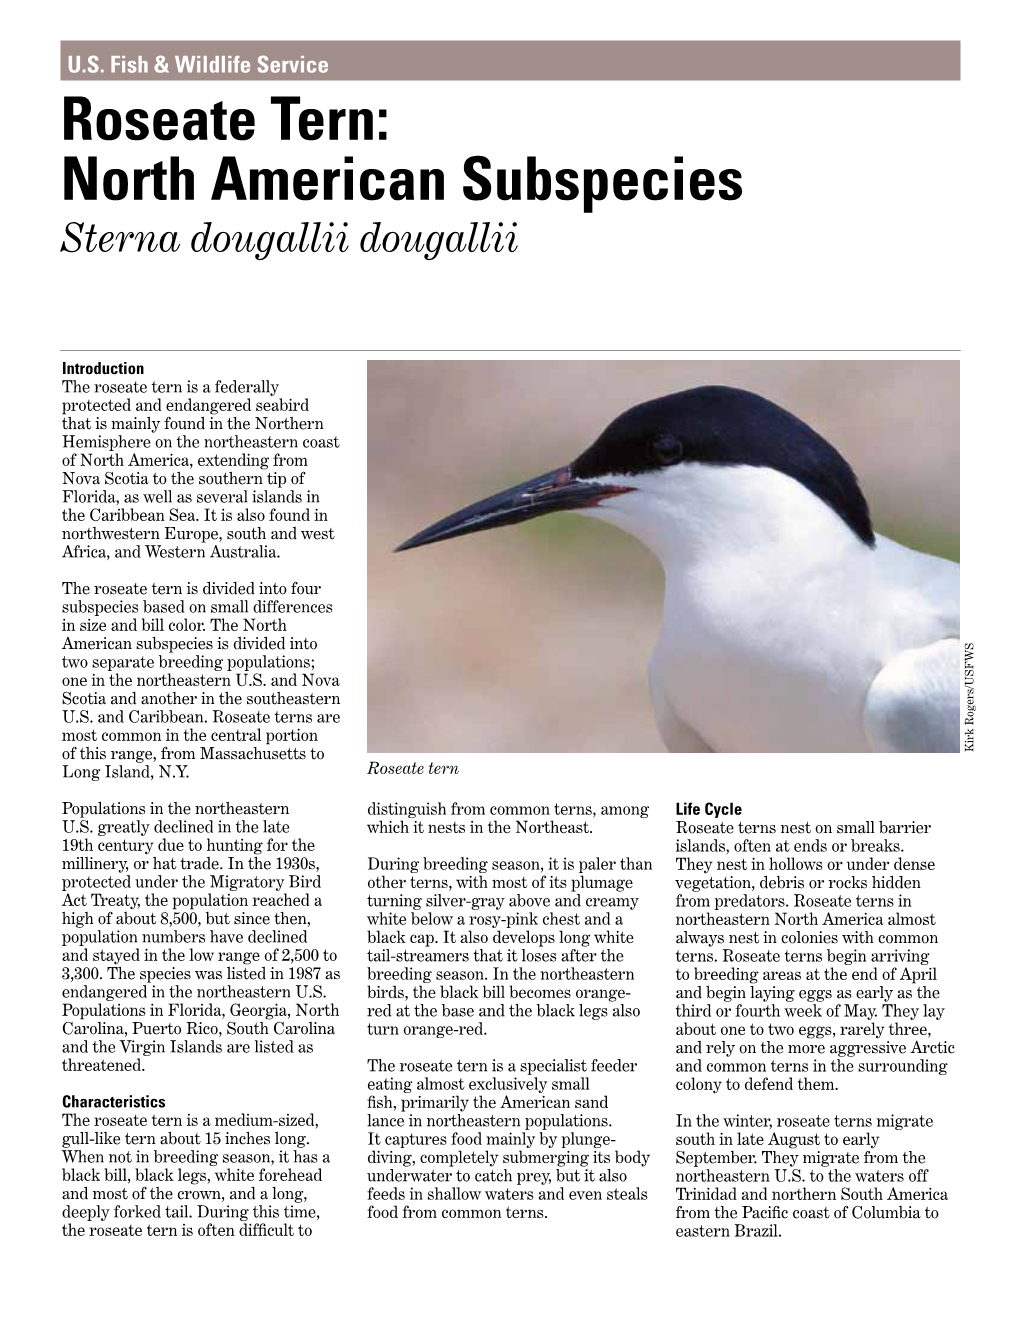 Roseate Tern: North American Subspecies Sterna Dougallii Dougallii